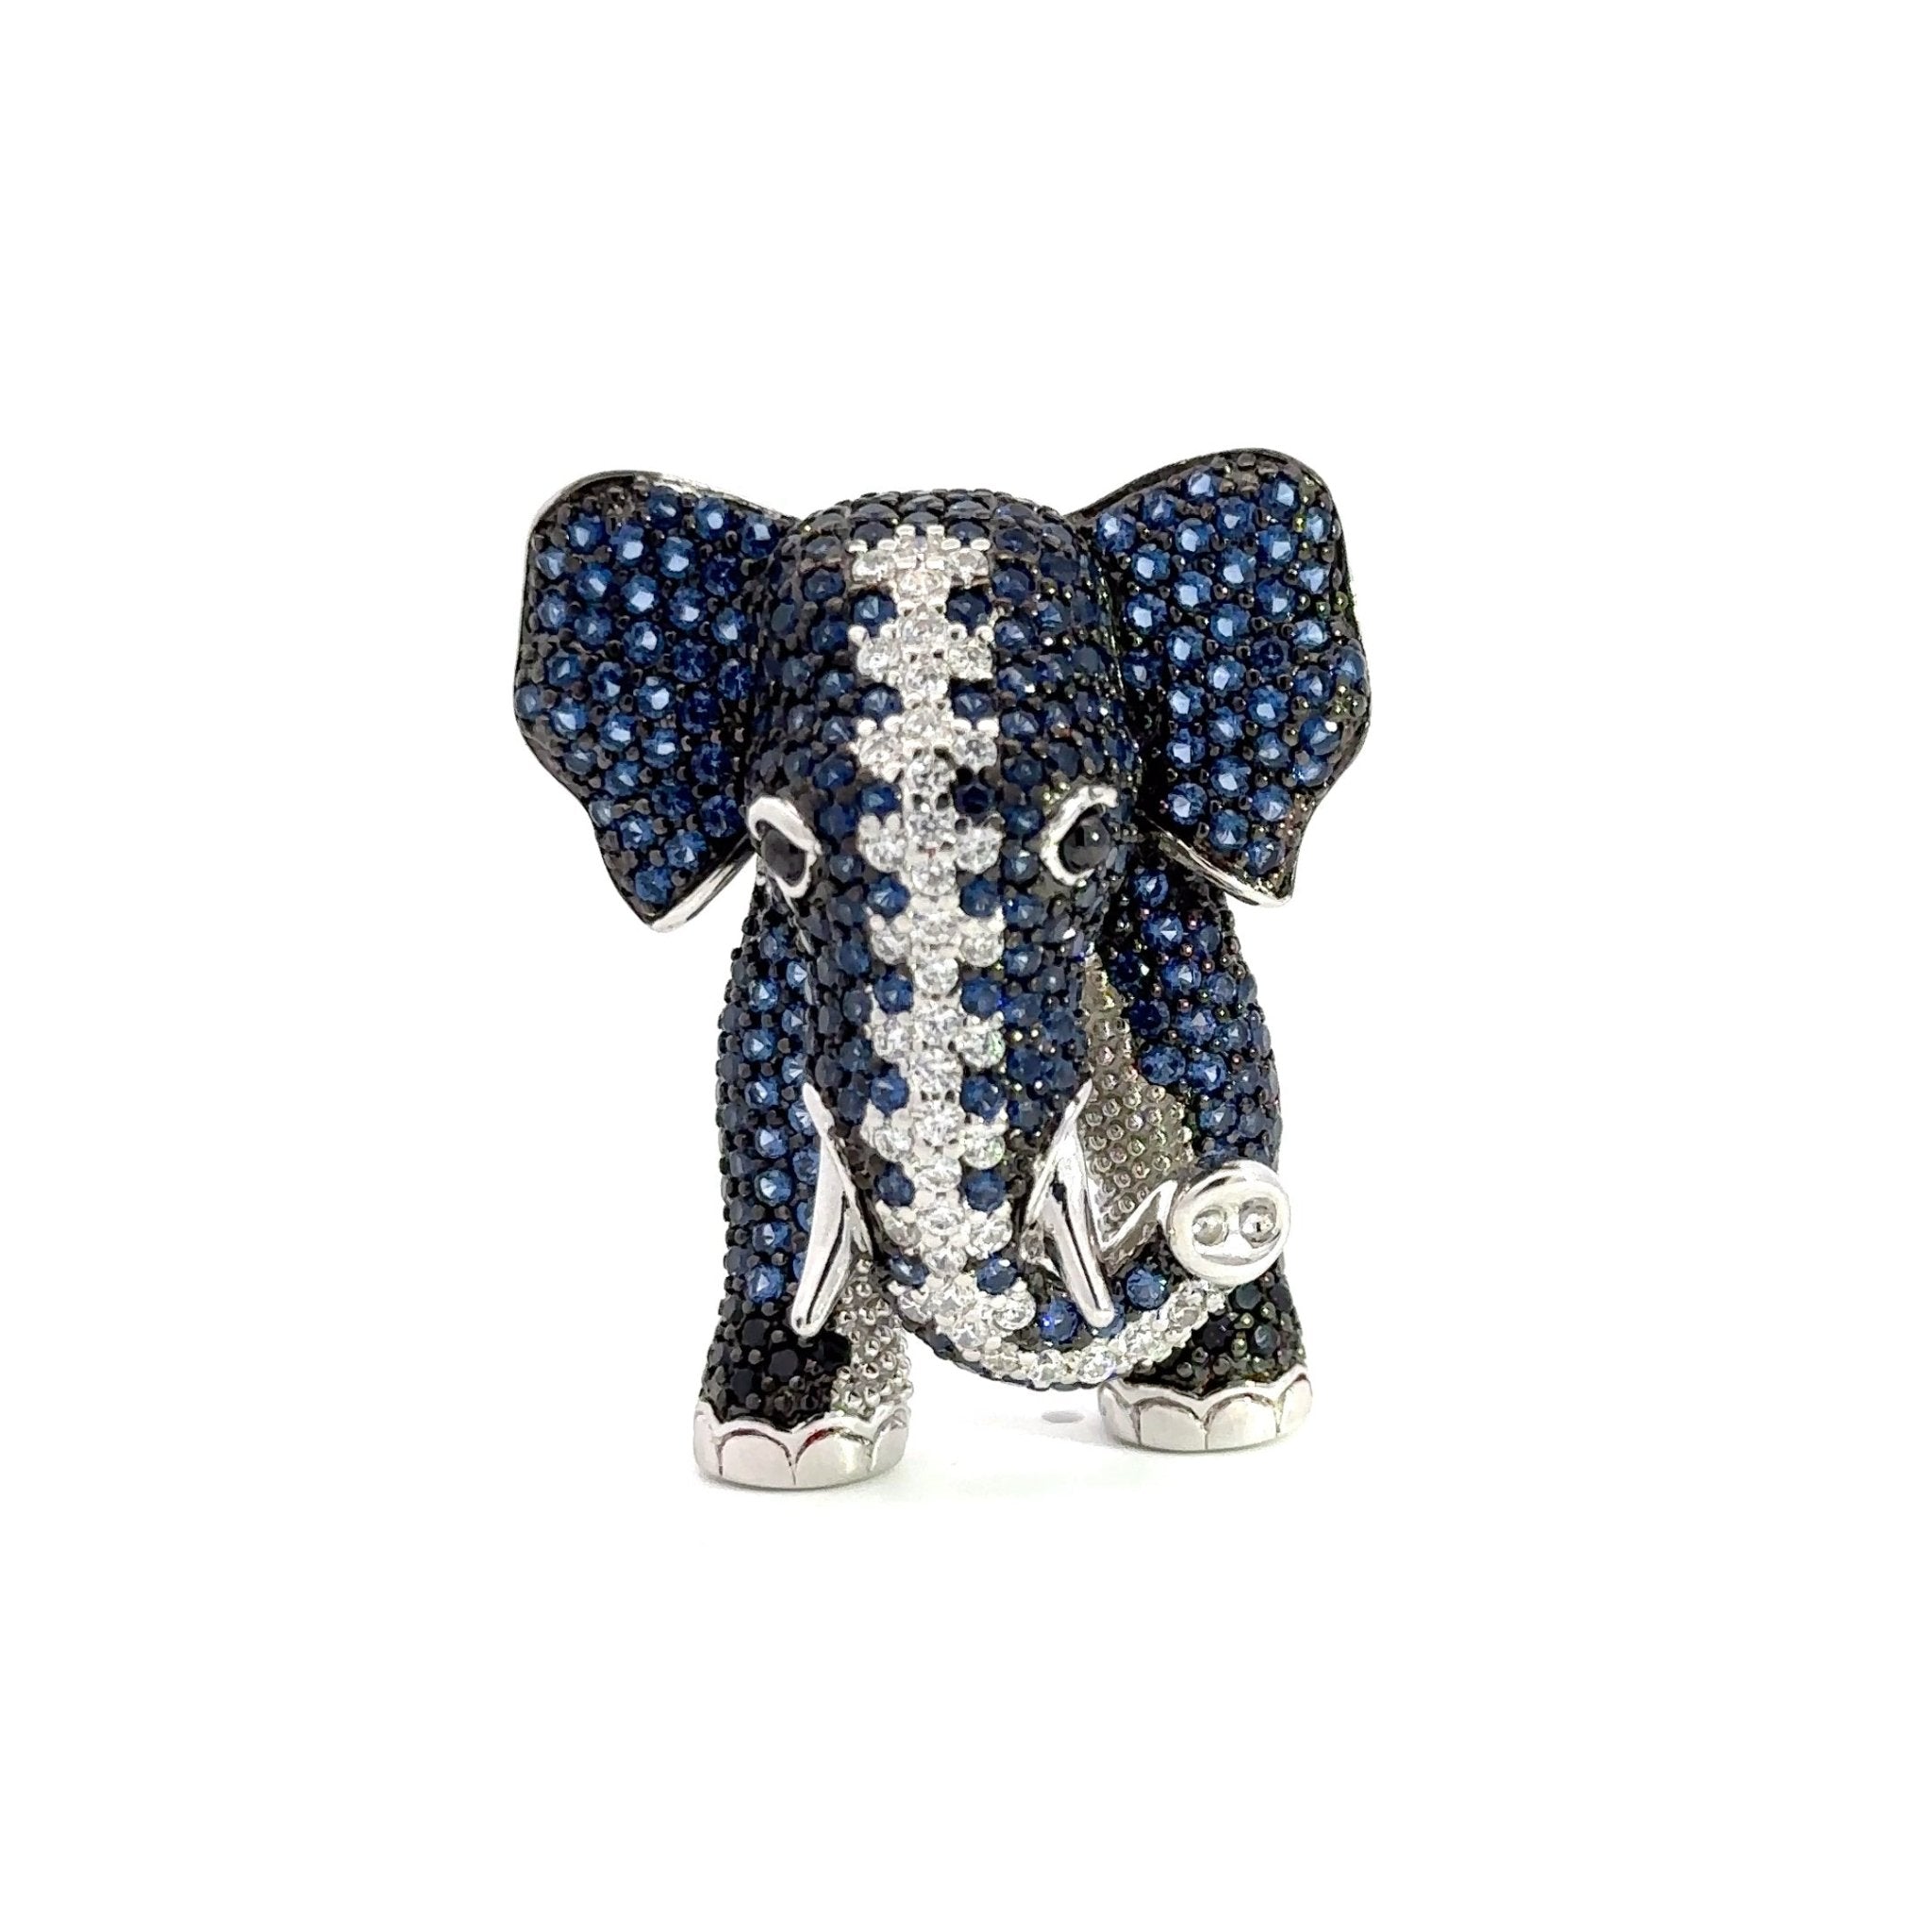 Blue Elephant Silver Pendant by Natkina